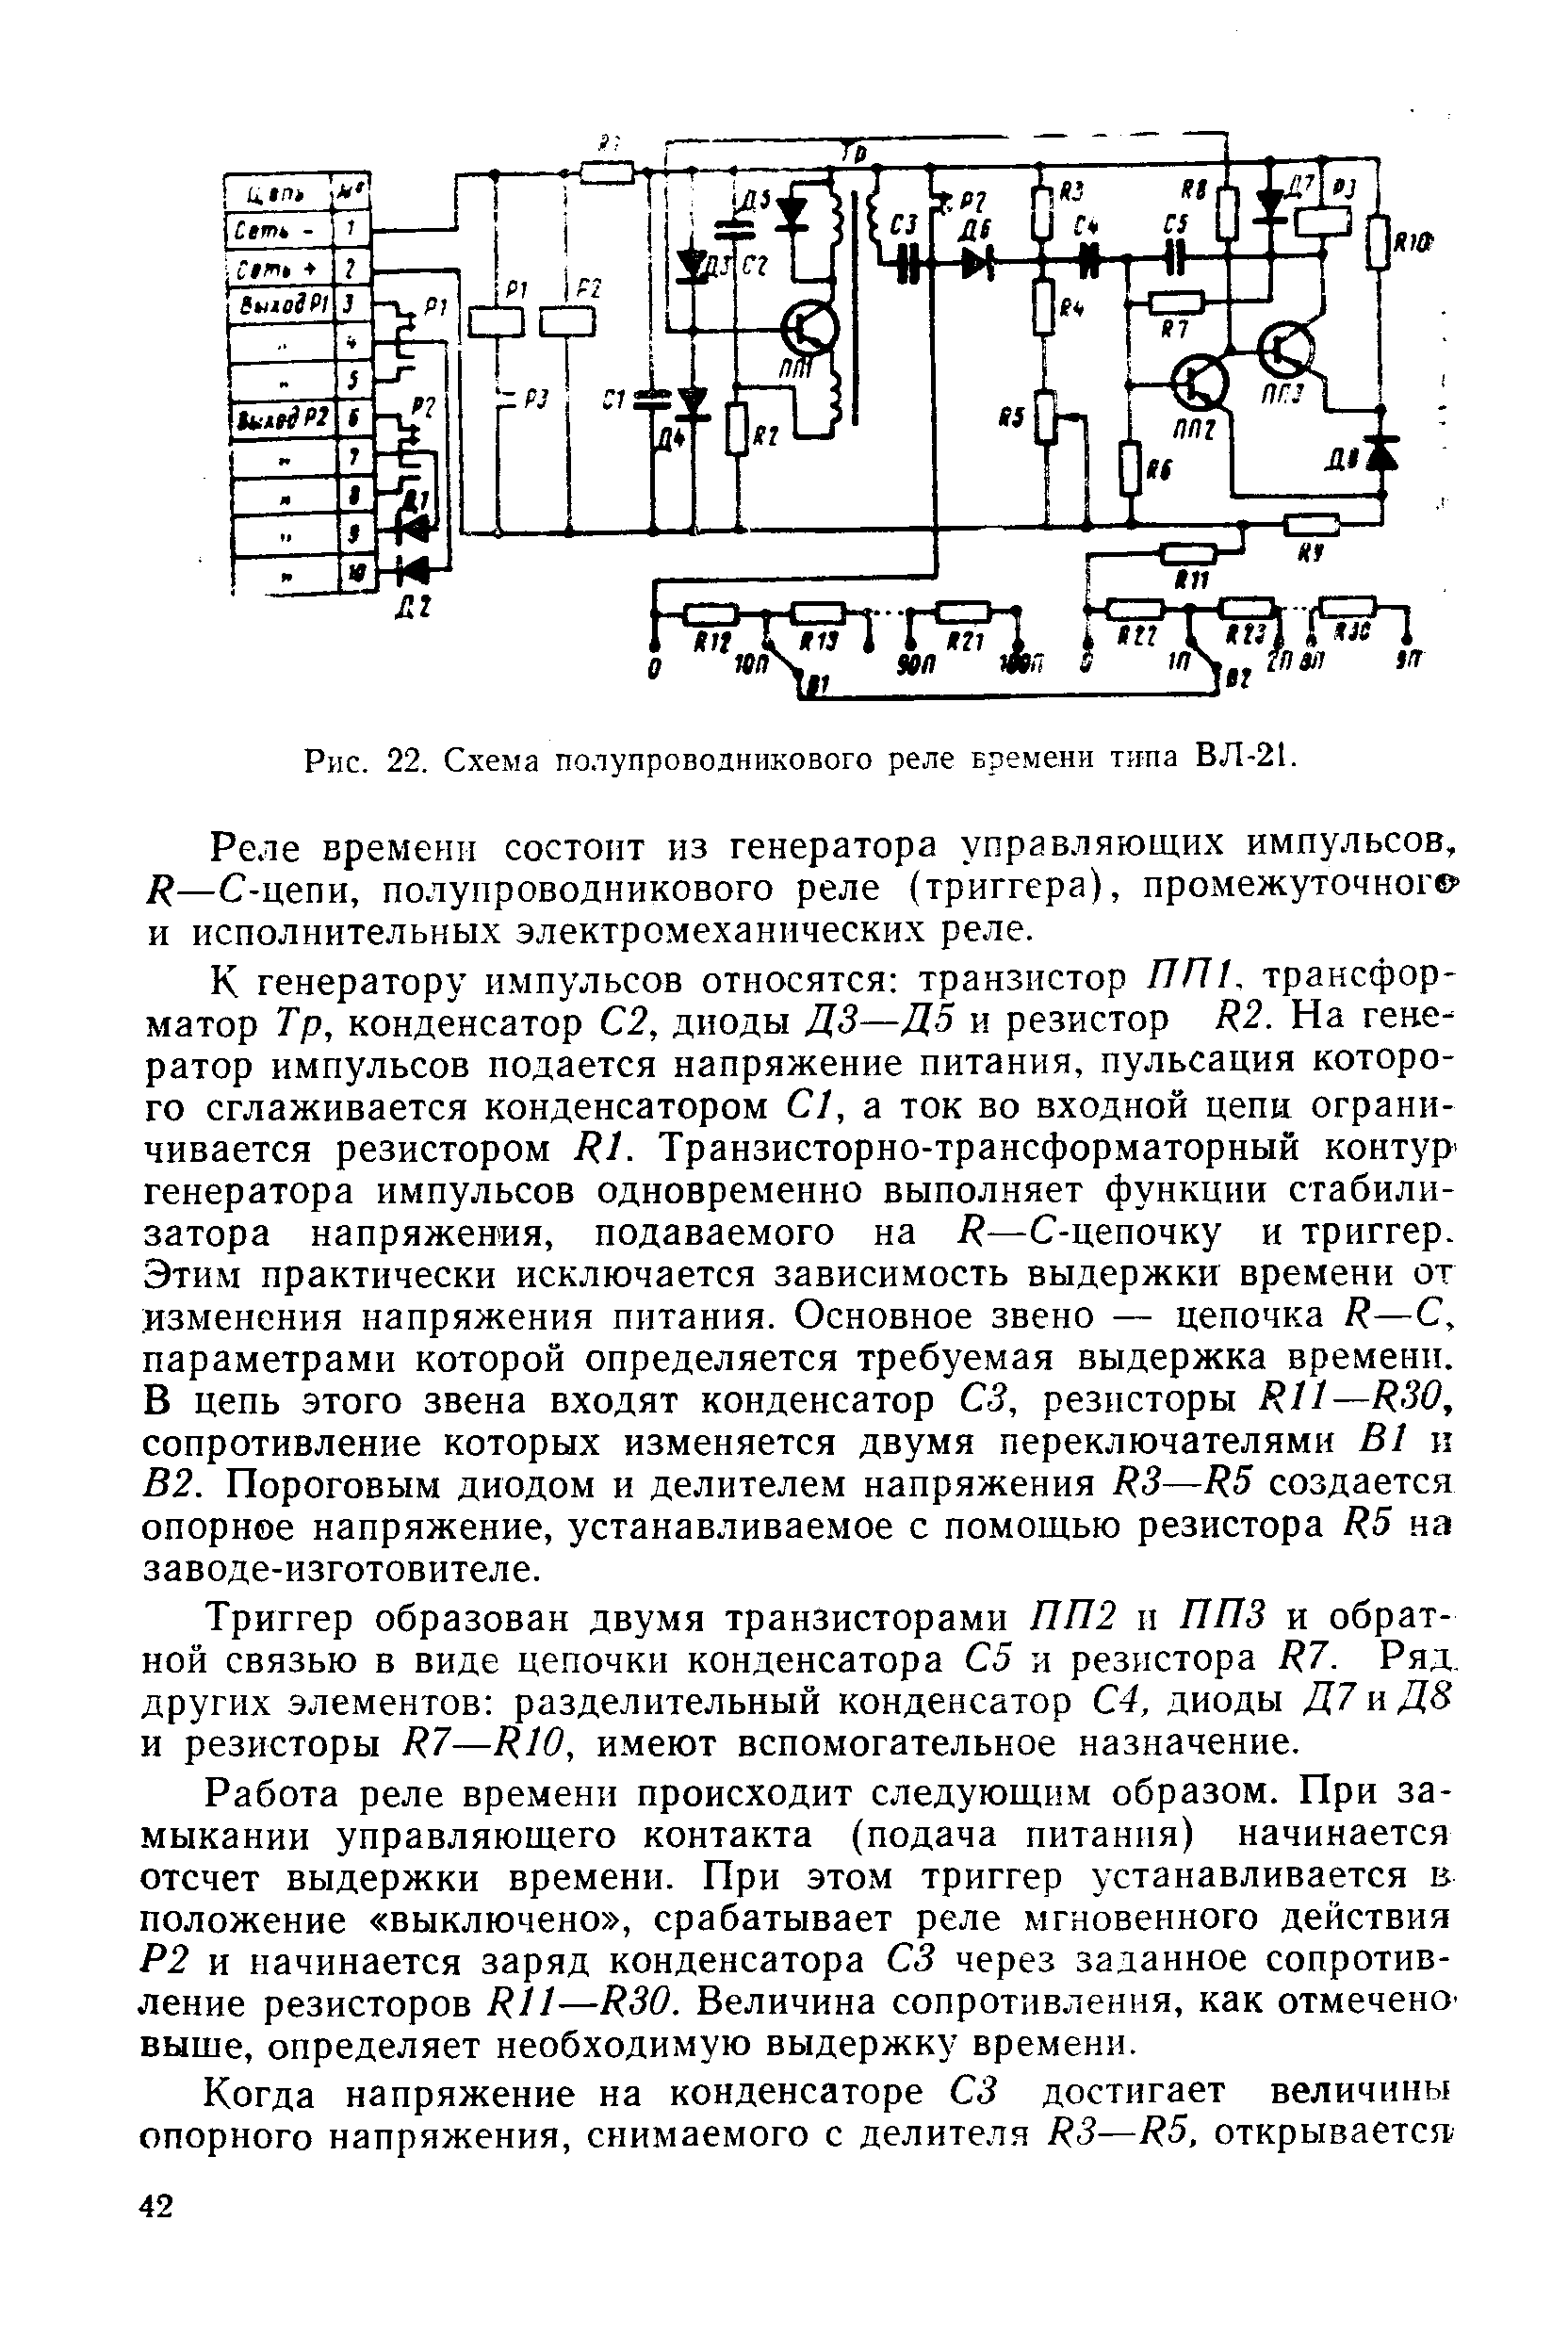 Рис. 22. Схема полупроводникового реле времени типа ВЛ-21.
